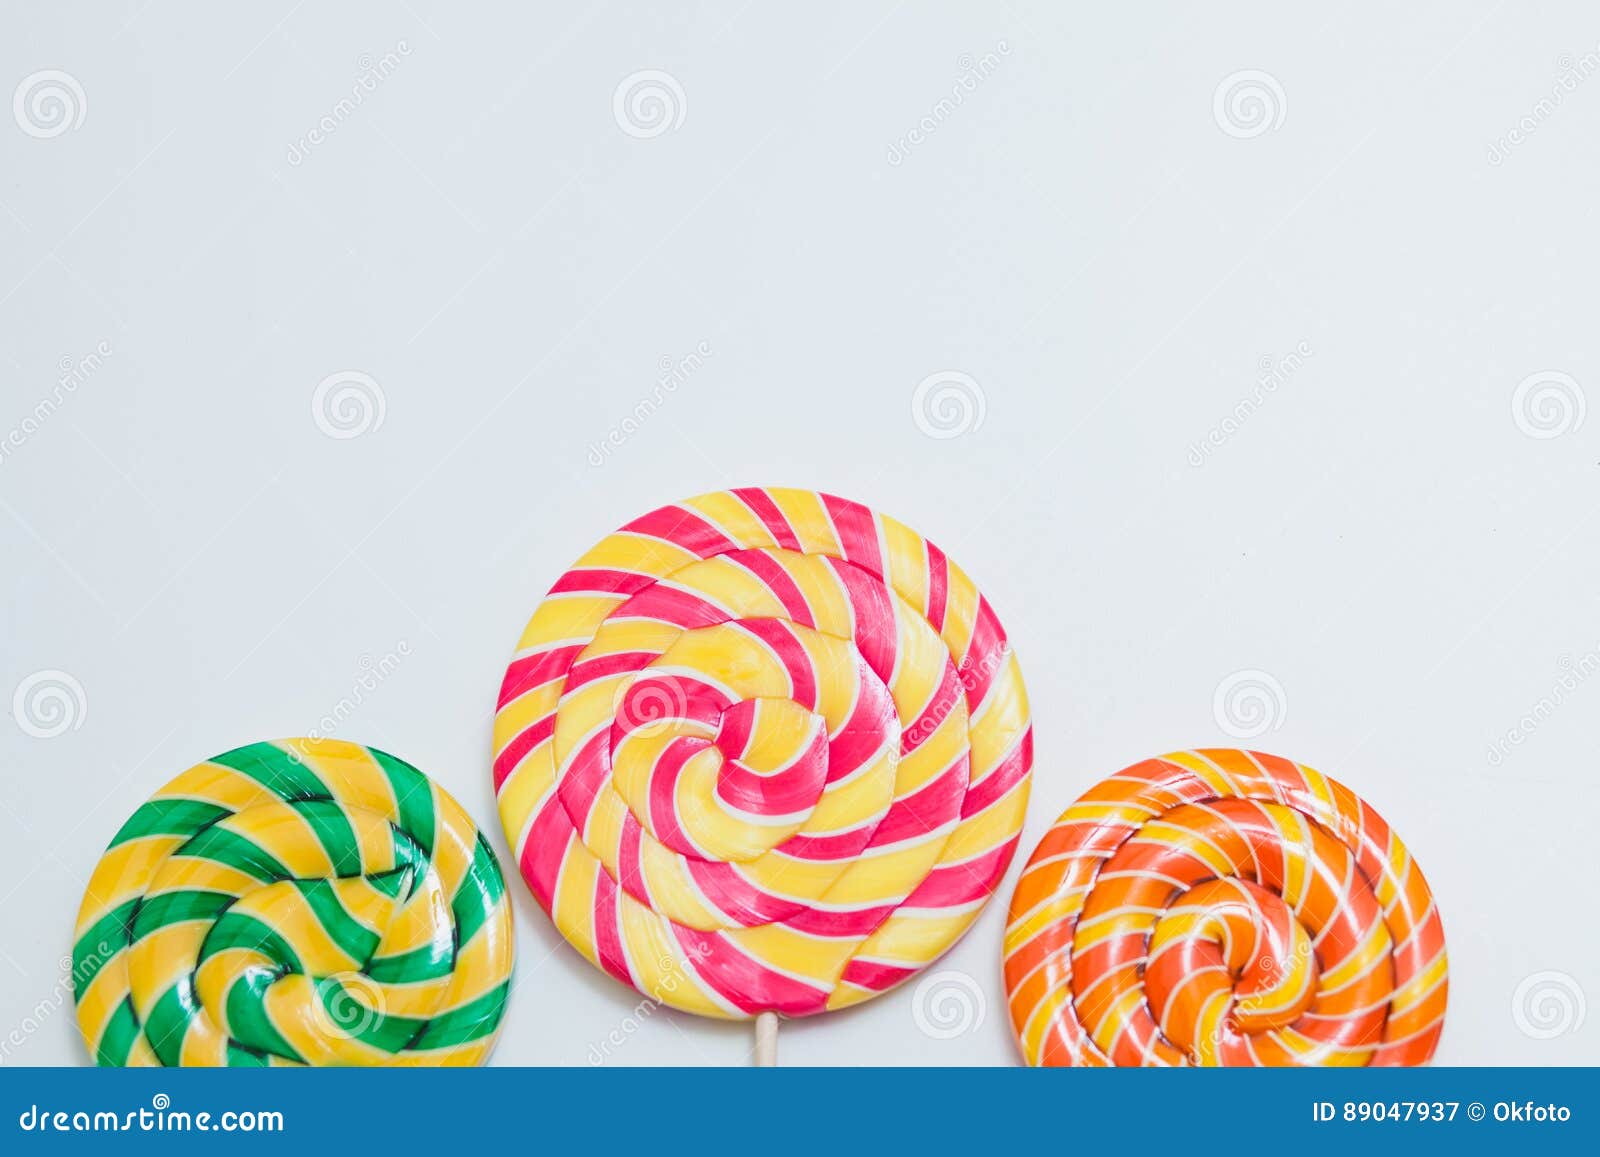 Big Yummy Lollipops on Sticks. Sweet Caramel Candy on White Stock Image ...